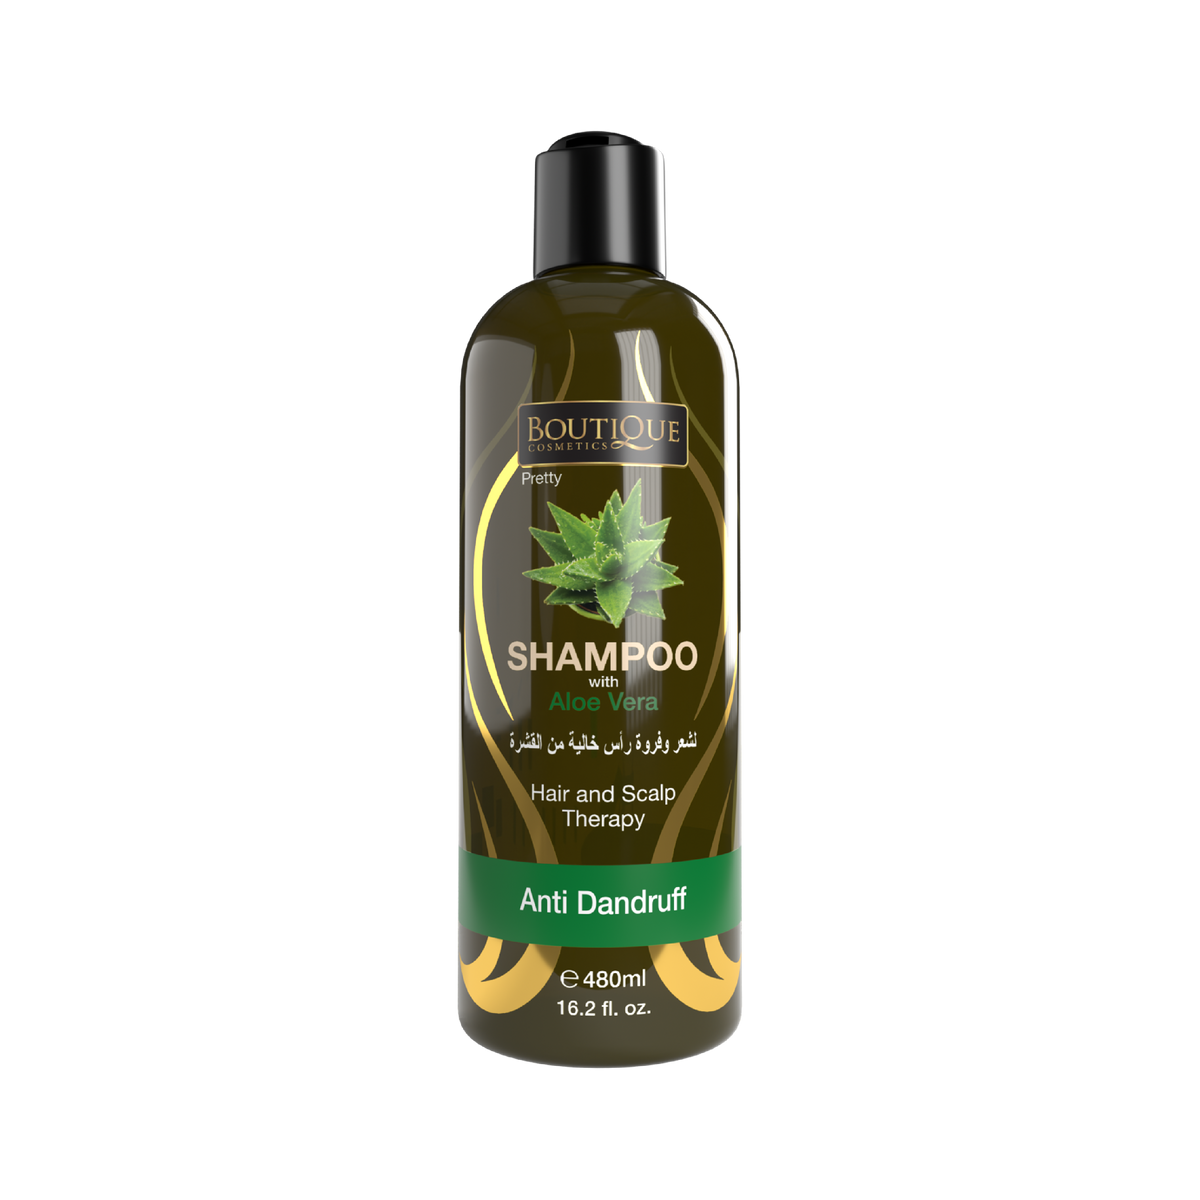 Soothing Aloe Vera Anti Dandruff Shampoo - 480ml